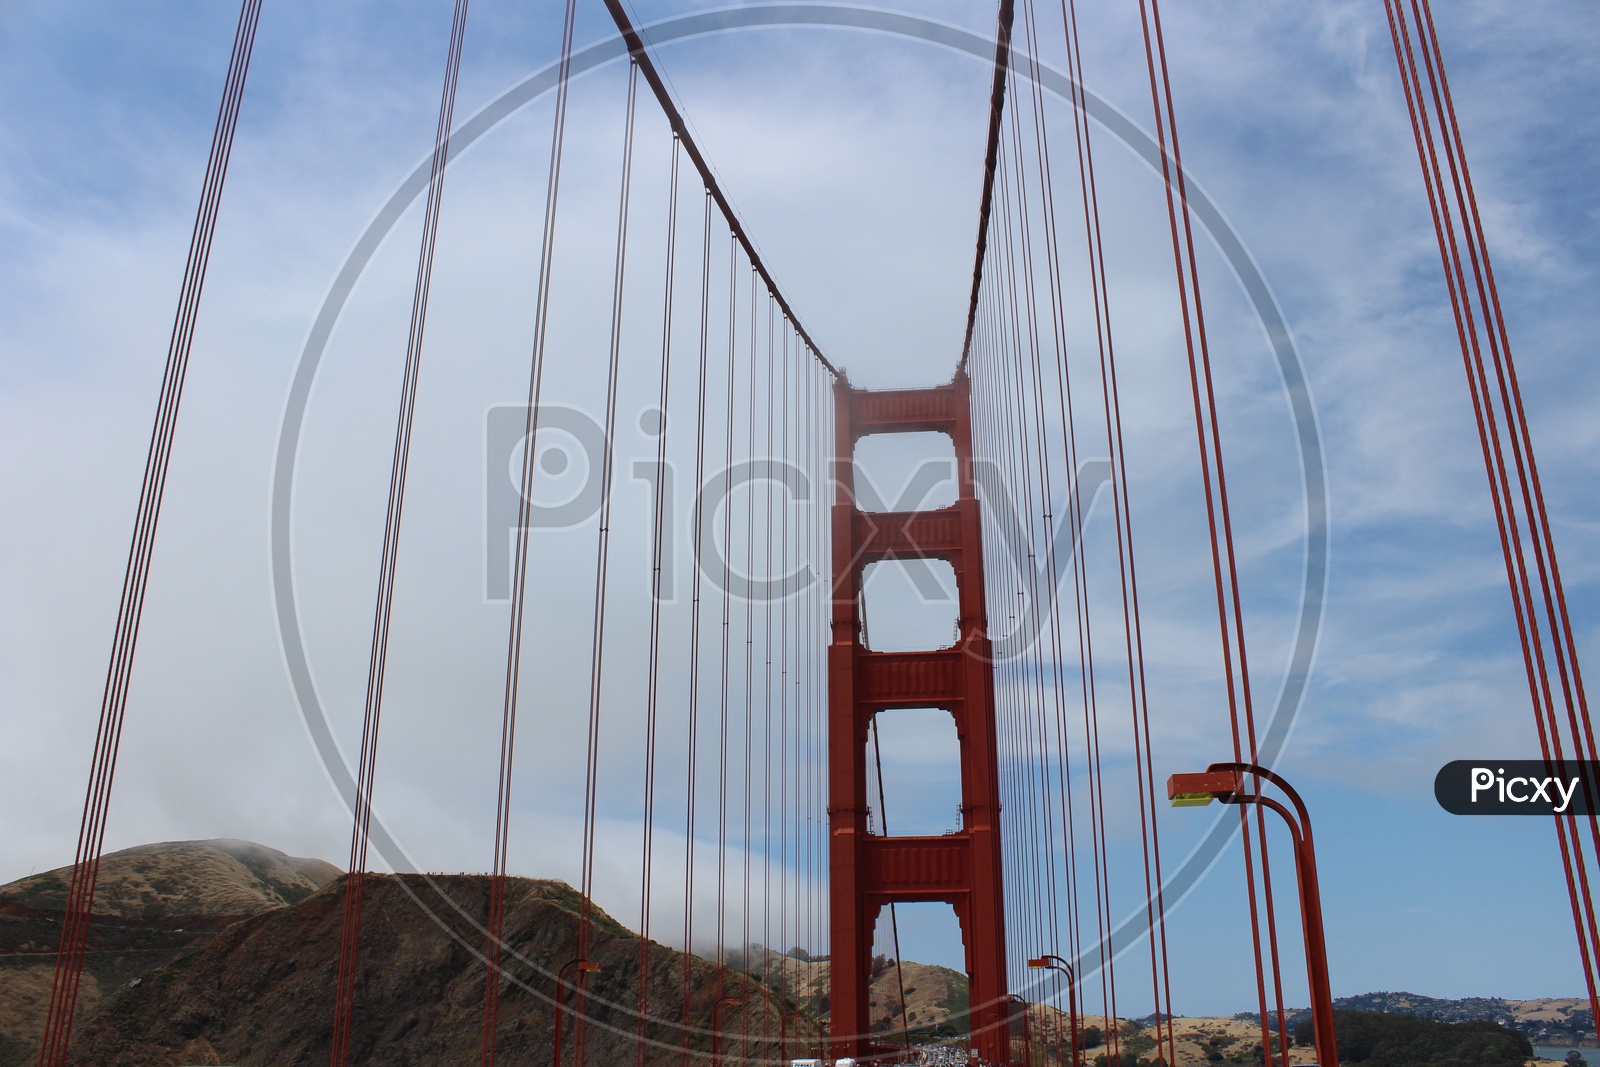 Architecture of Golden Gate Bridge